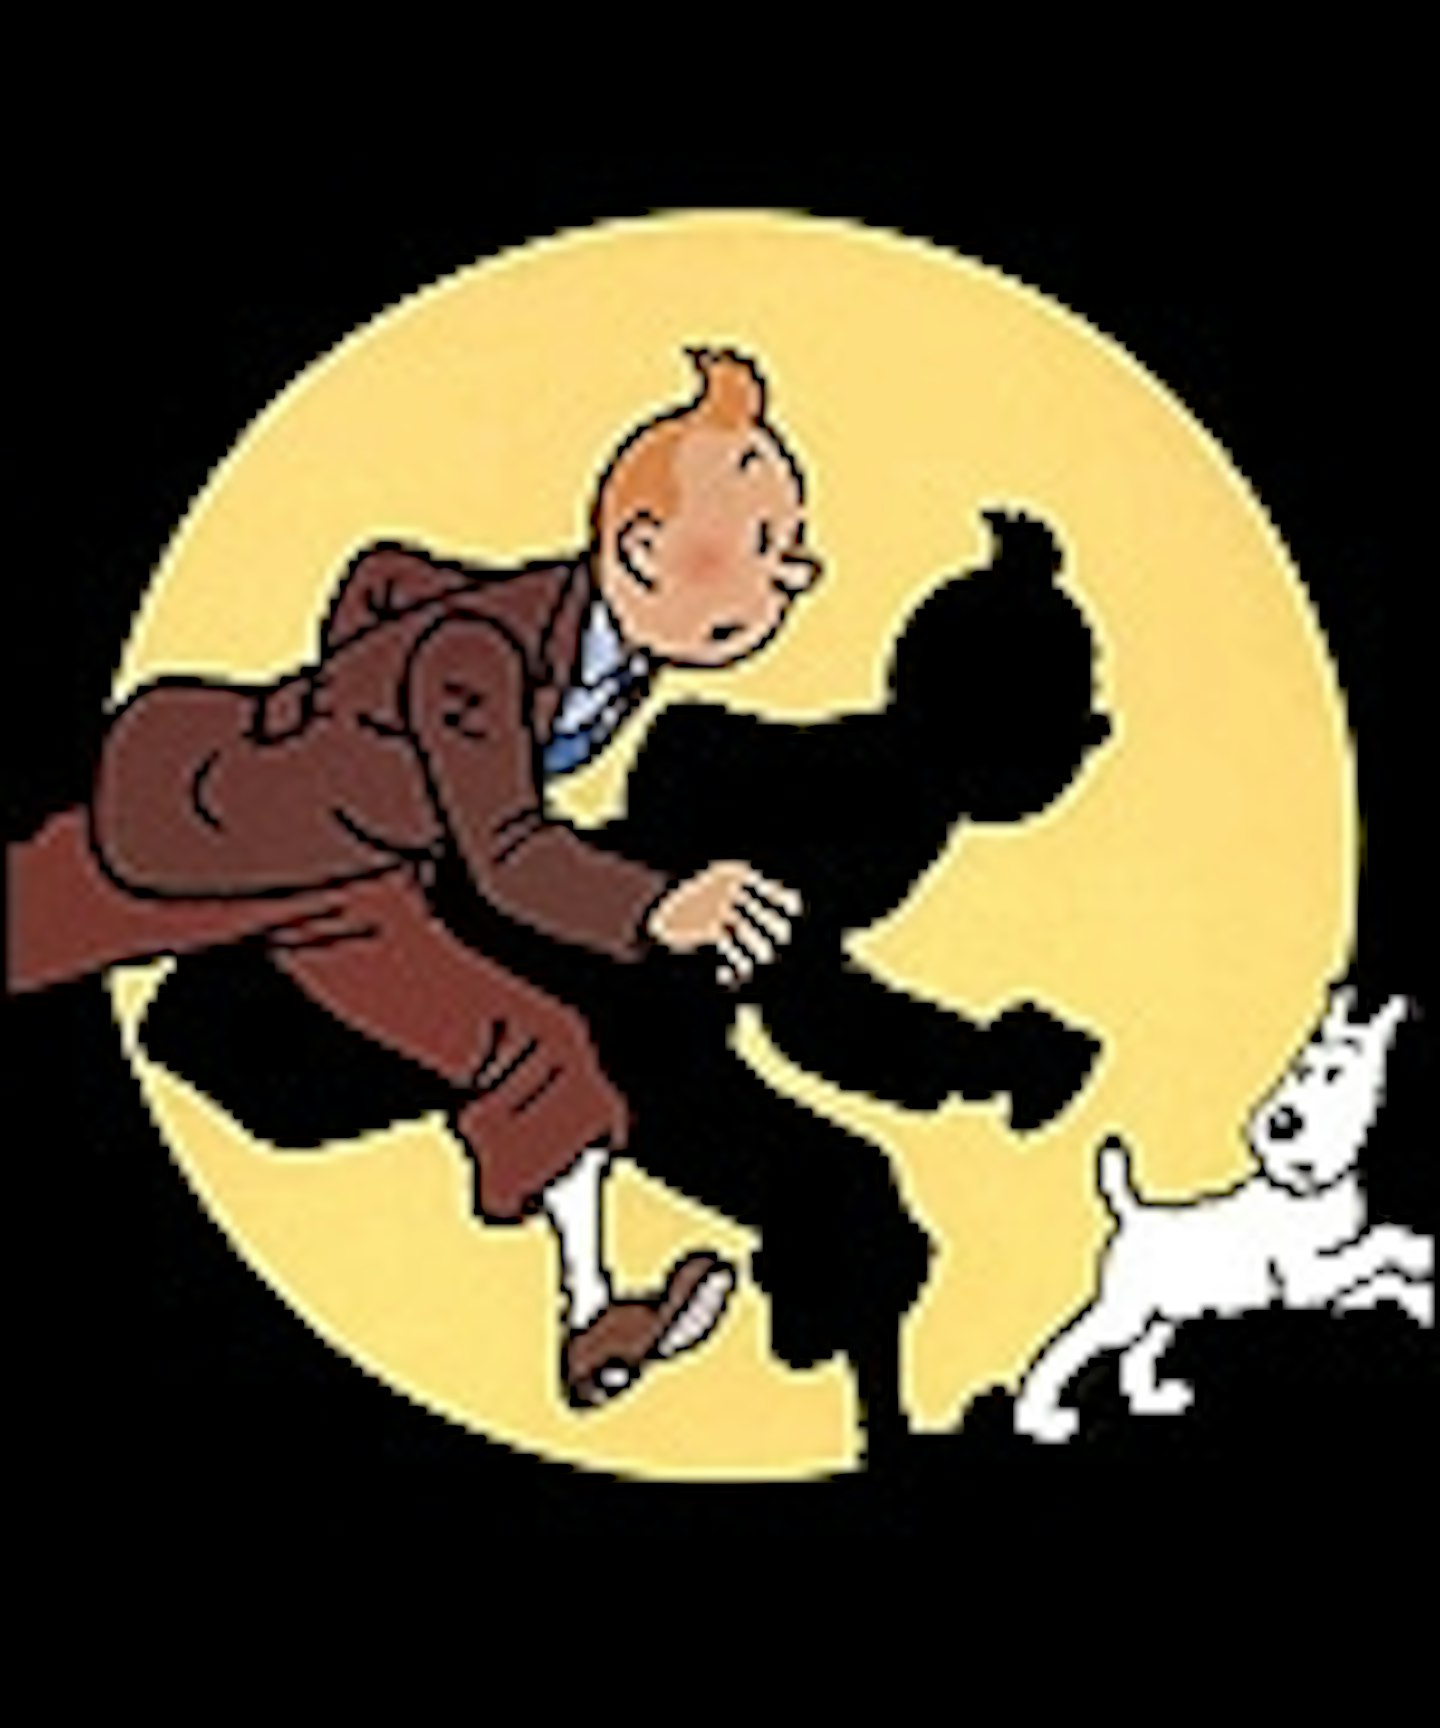 Spielberg's Tintin Set For 2011